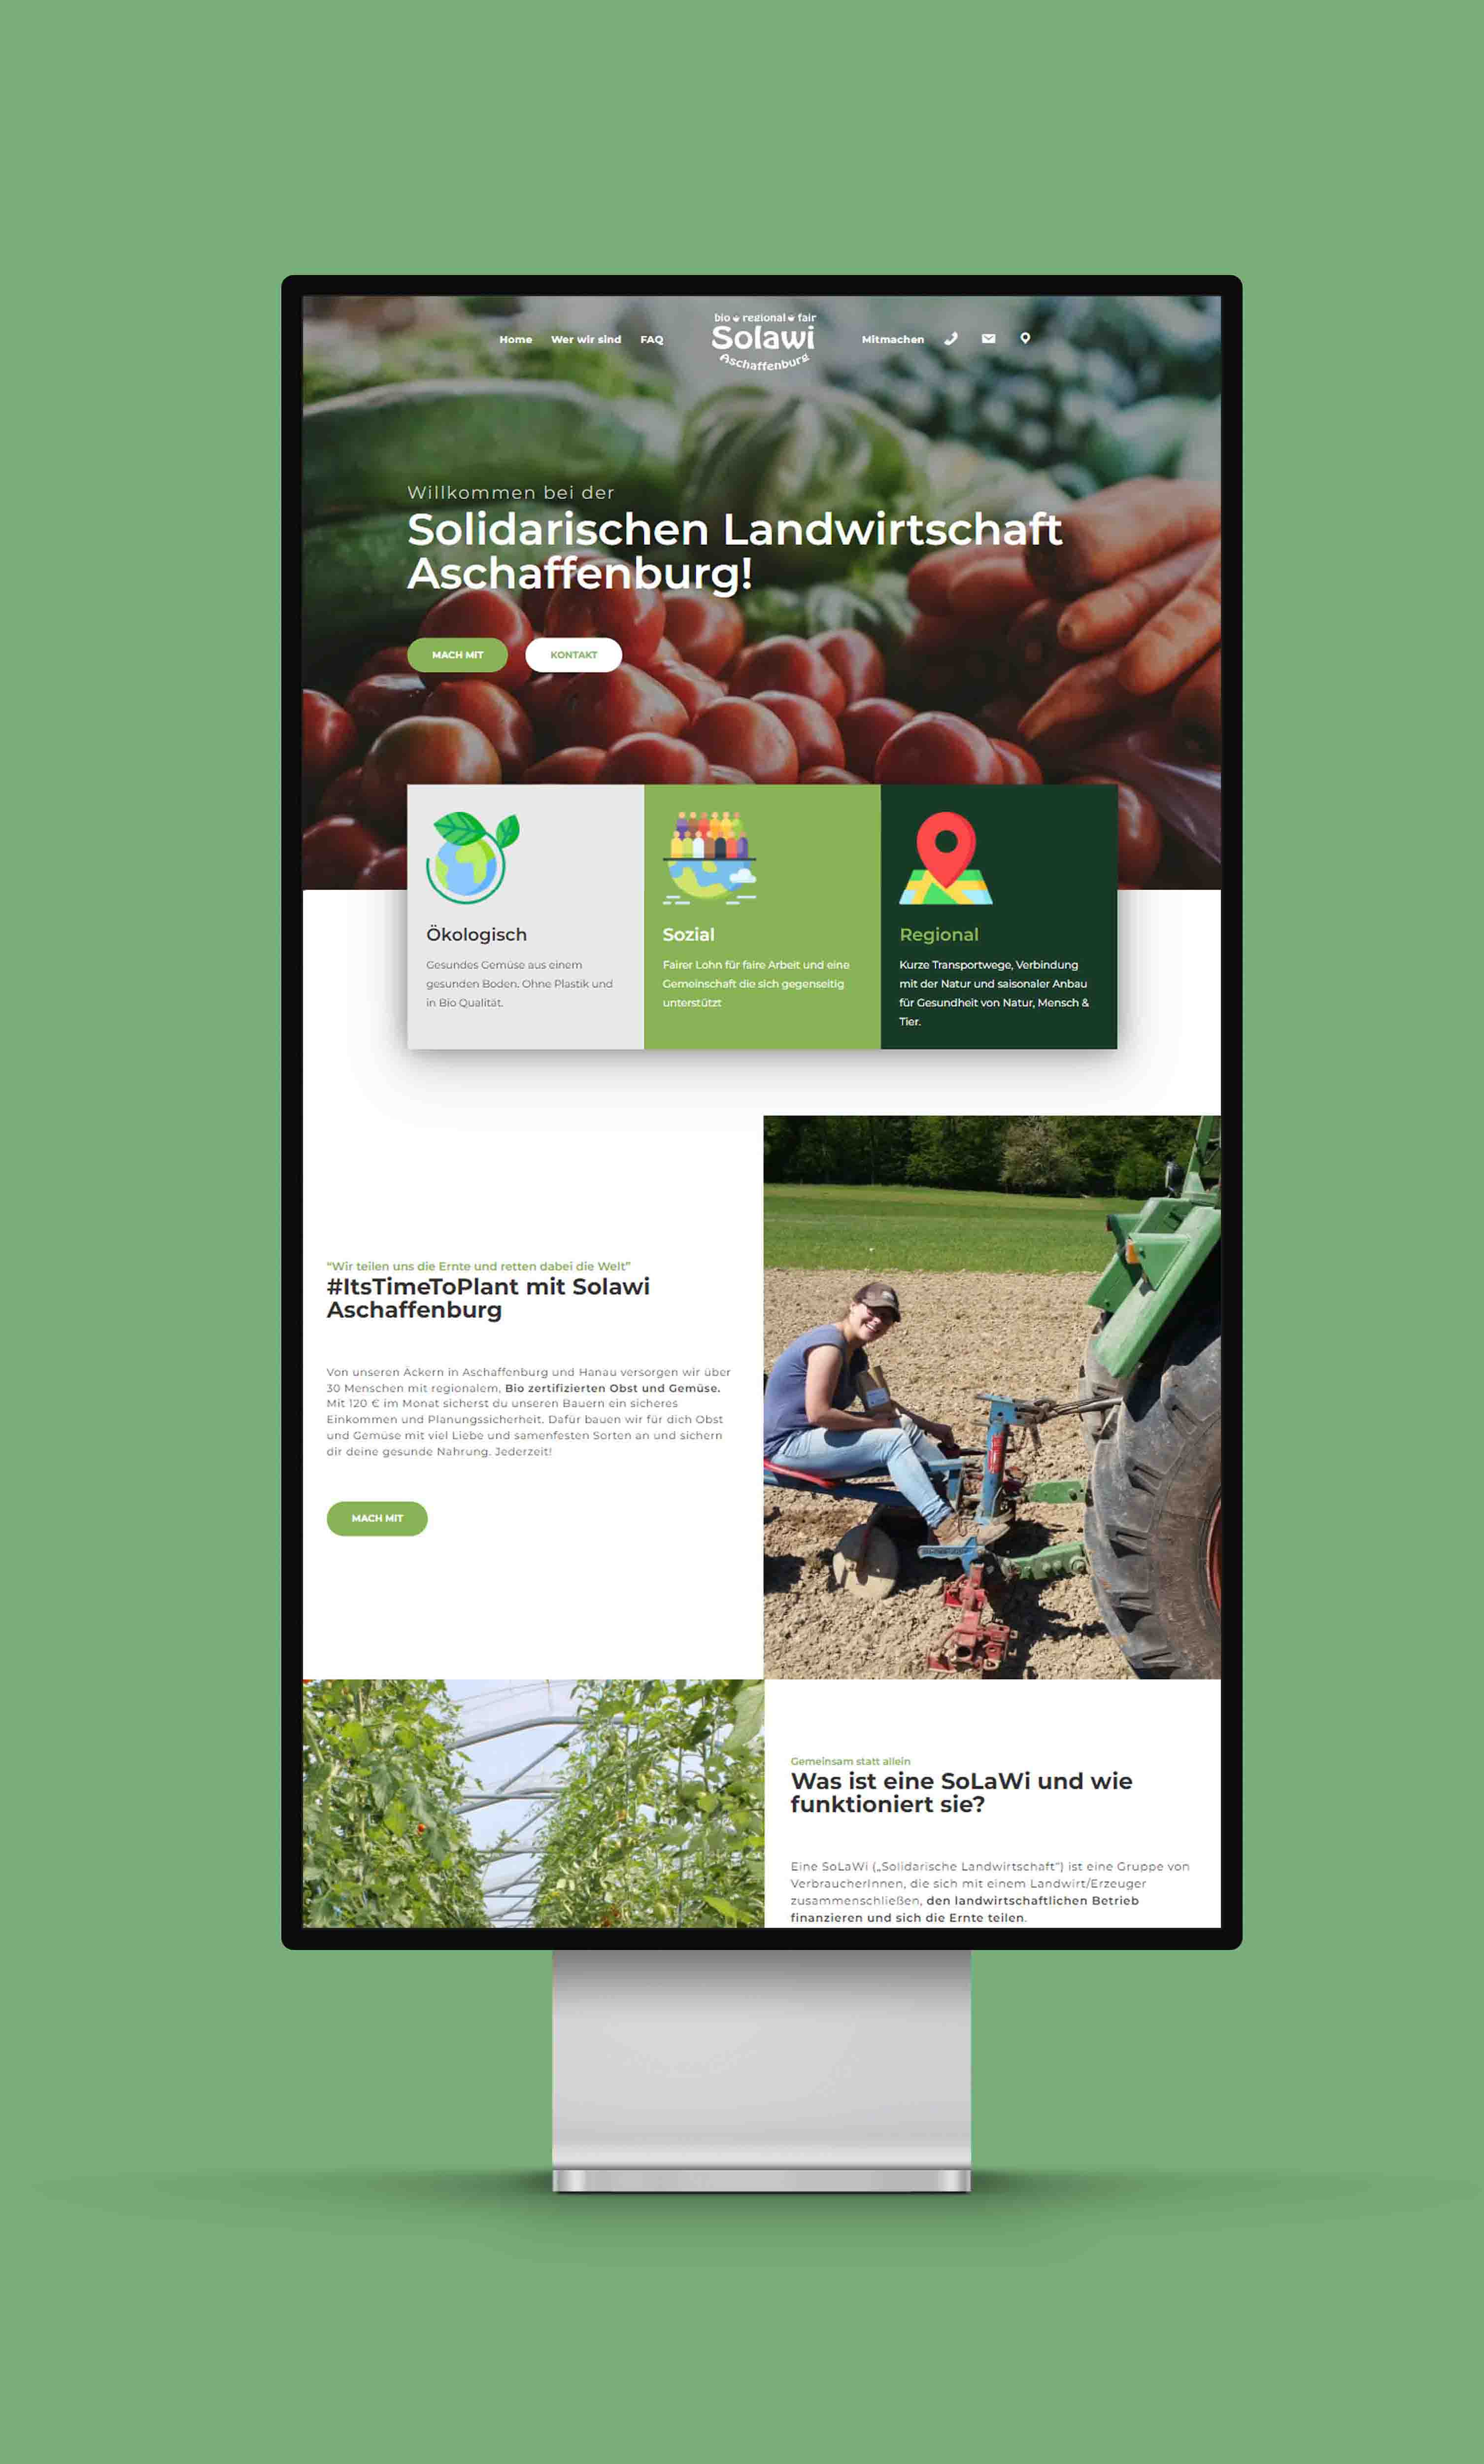 A website for communal farming